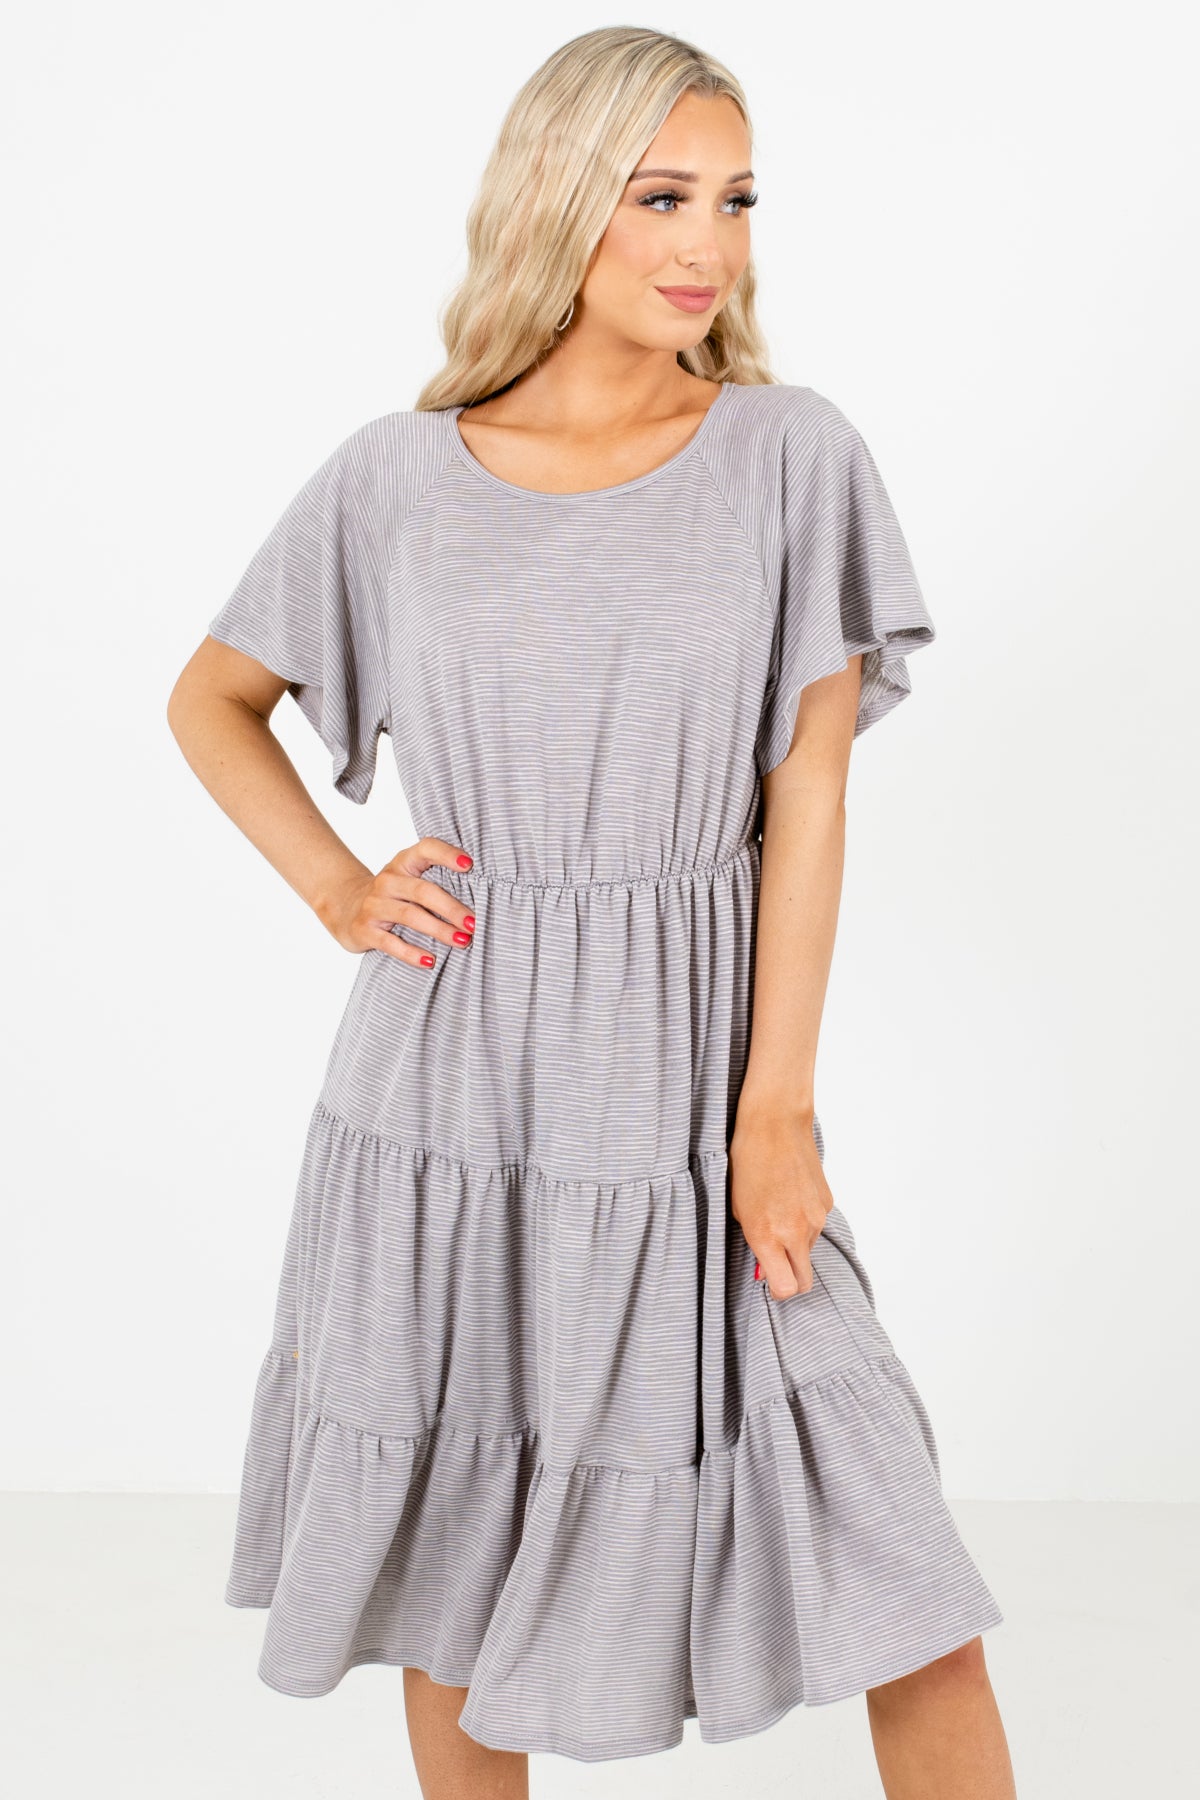 Gray Striped Boutique Knee-Length Dresses for Women